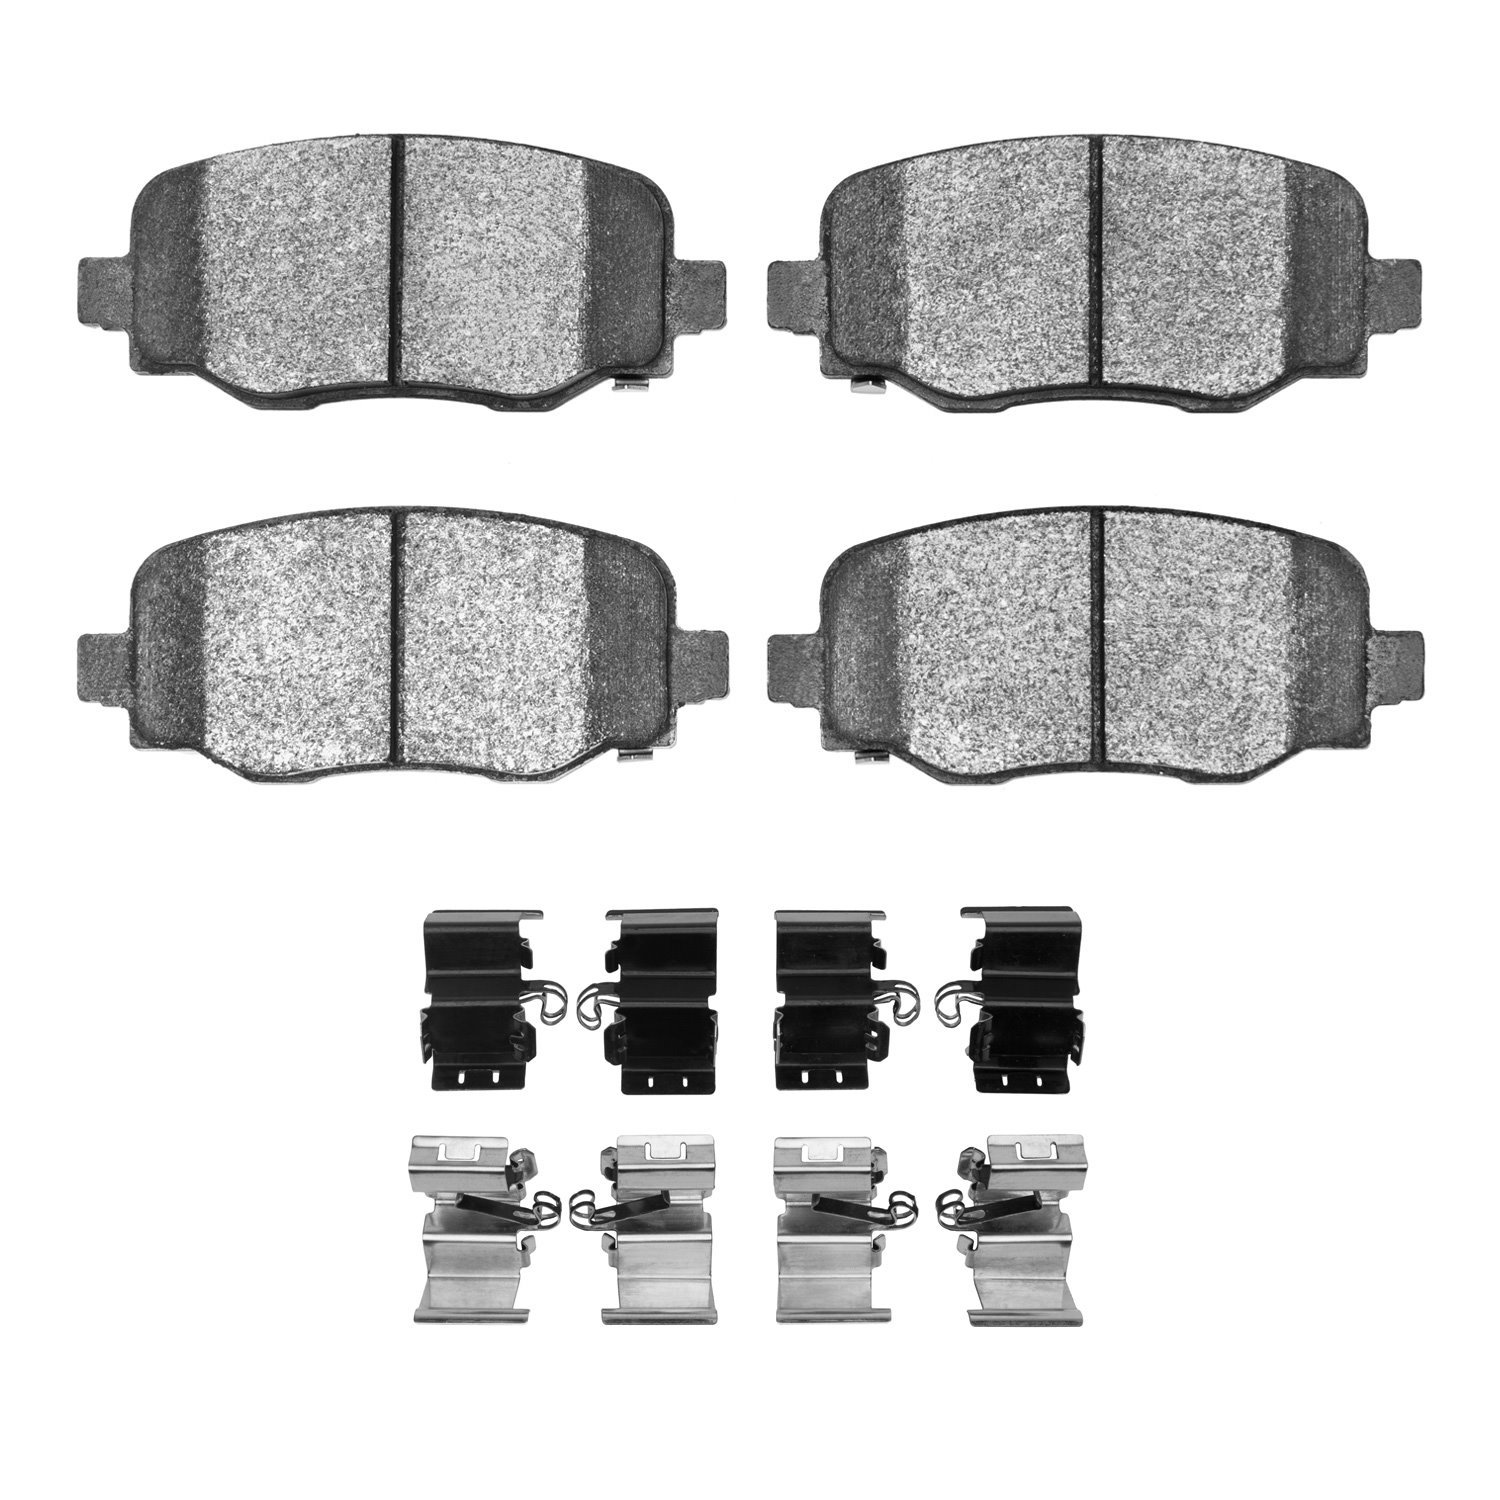 1310-1734-01 3000-Series Ceramic Brake Pads & Hardware Kit, Fits Select Mopar, Position: Rear